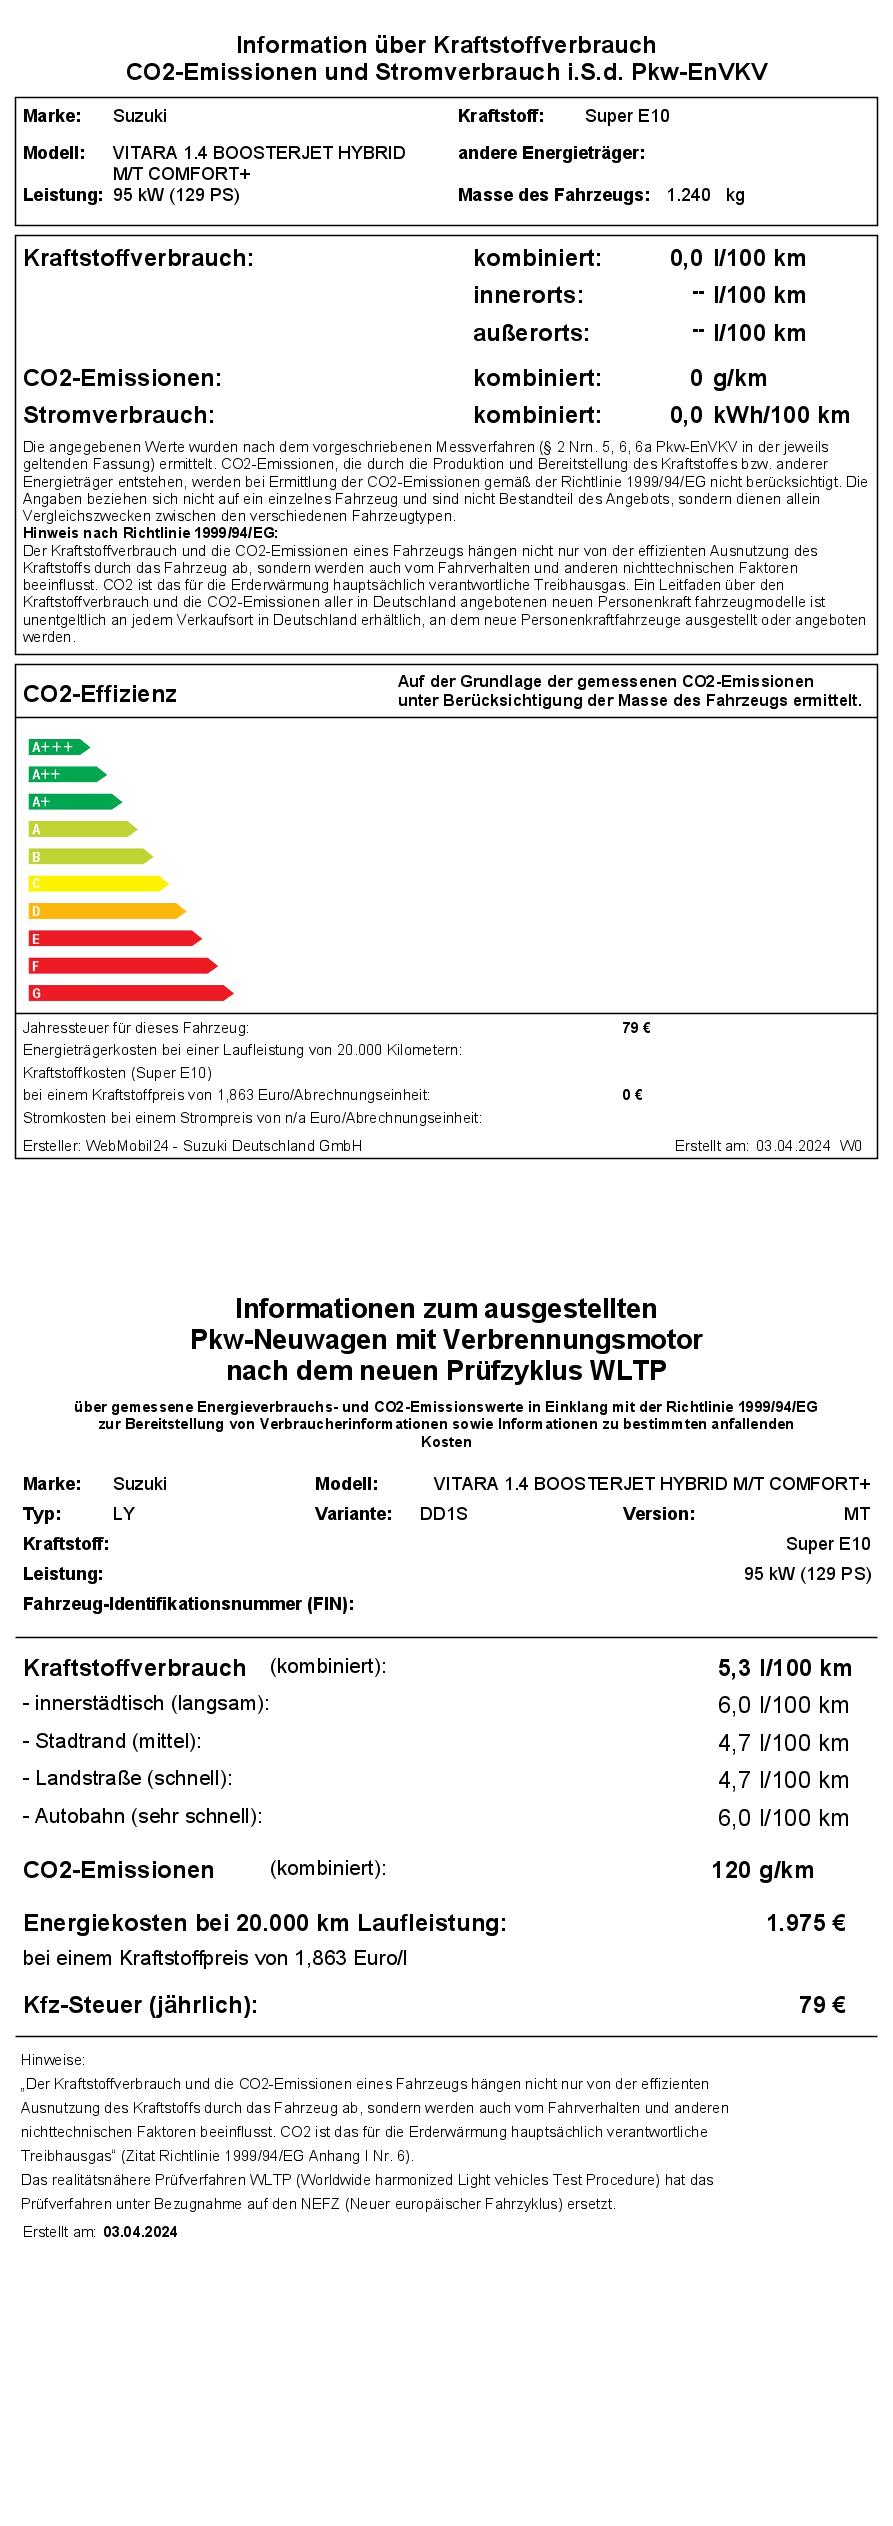 Vitara 5-Türer - 1.4 BOOSTERJET HYBRID - Comfort+ Energie Label (Bild)